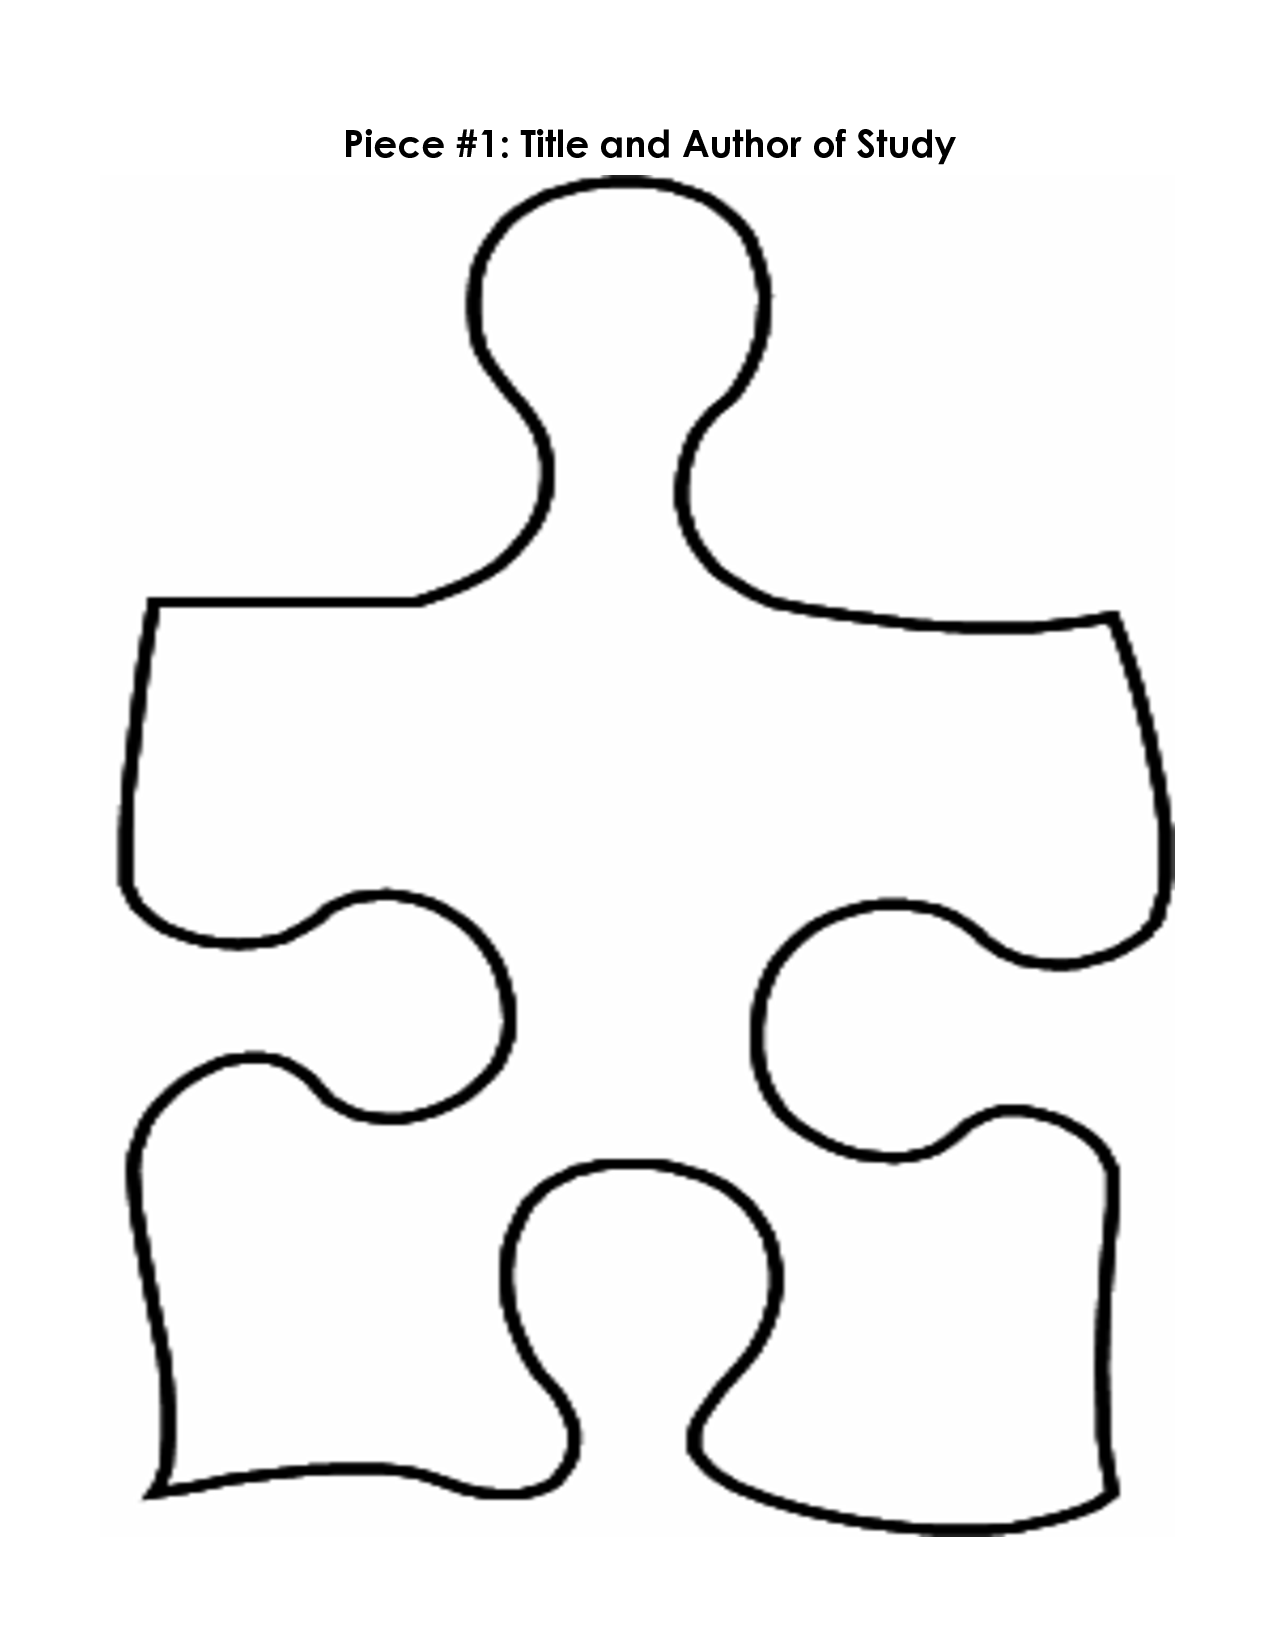 Best Photos of Puzzle Piece Template - Jigsaw Puzzle Pieces ...